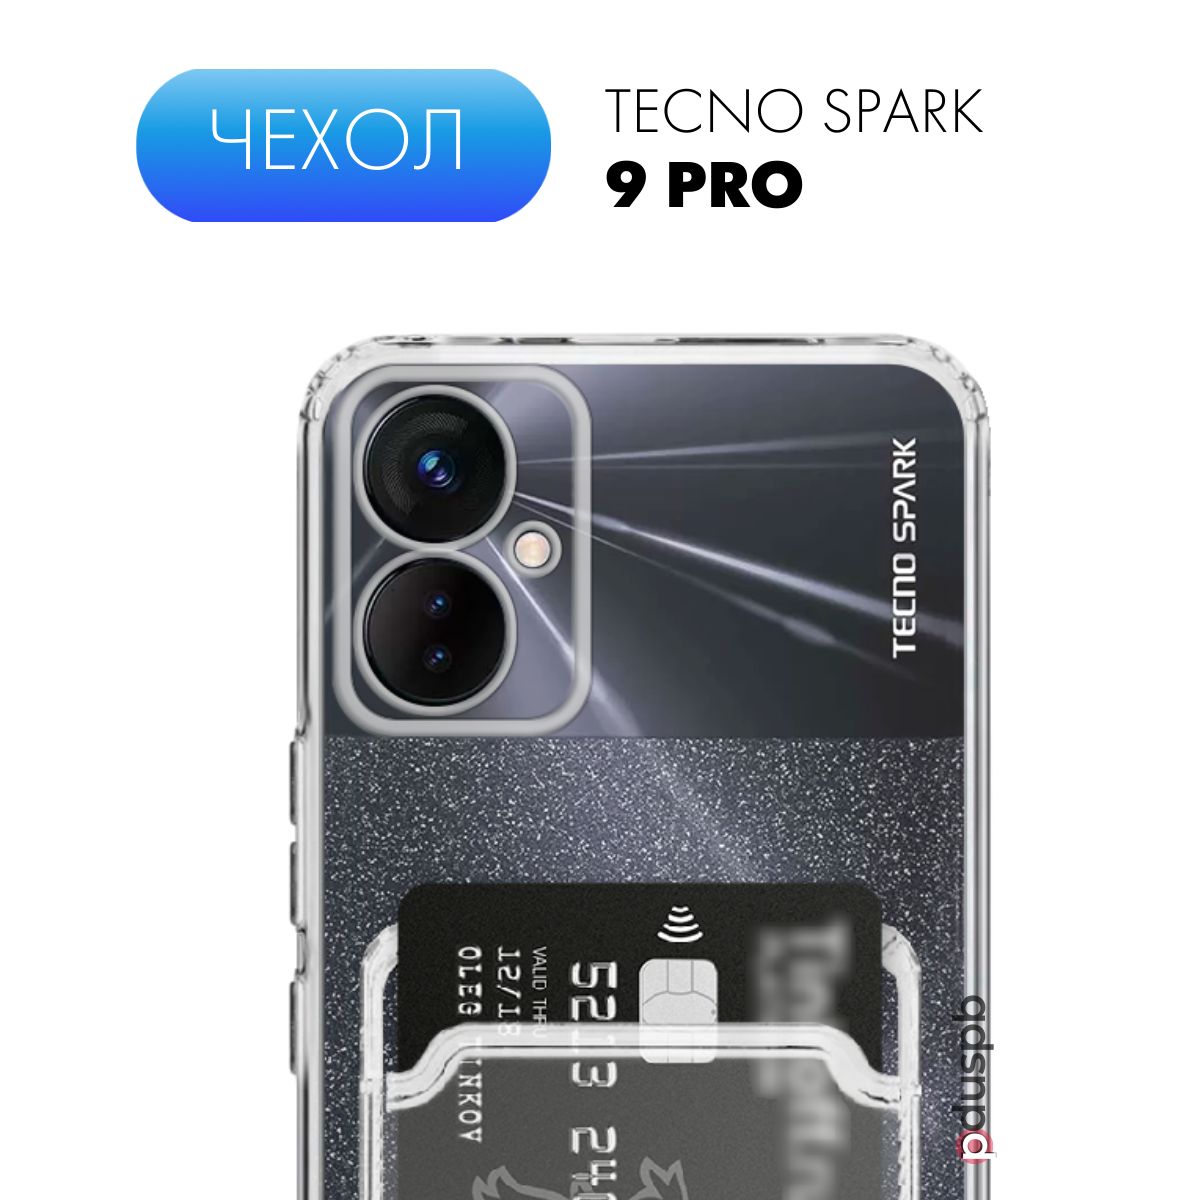 Techno Spark 9 Pro слот сим. Техно Спарк 9 про схем. Техно Спарк 20 про 4 характеристика. Techno Spark 20 Pro DNS Выборг. Телефон techno spark 9